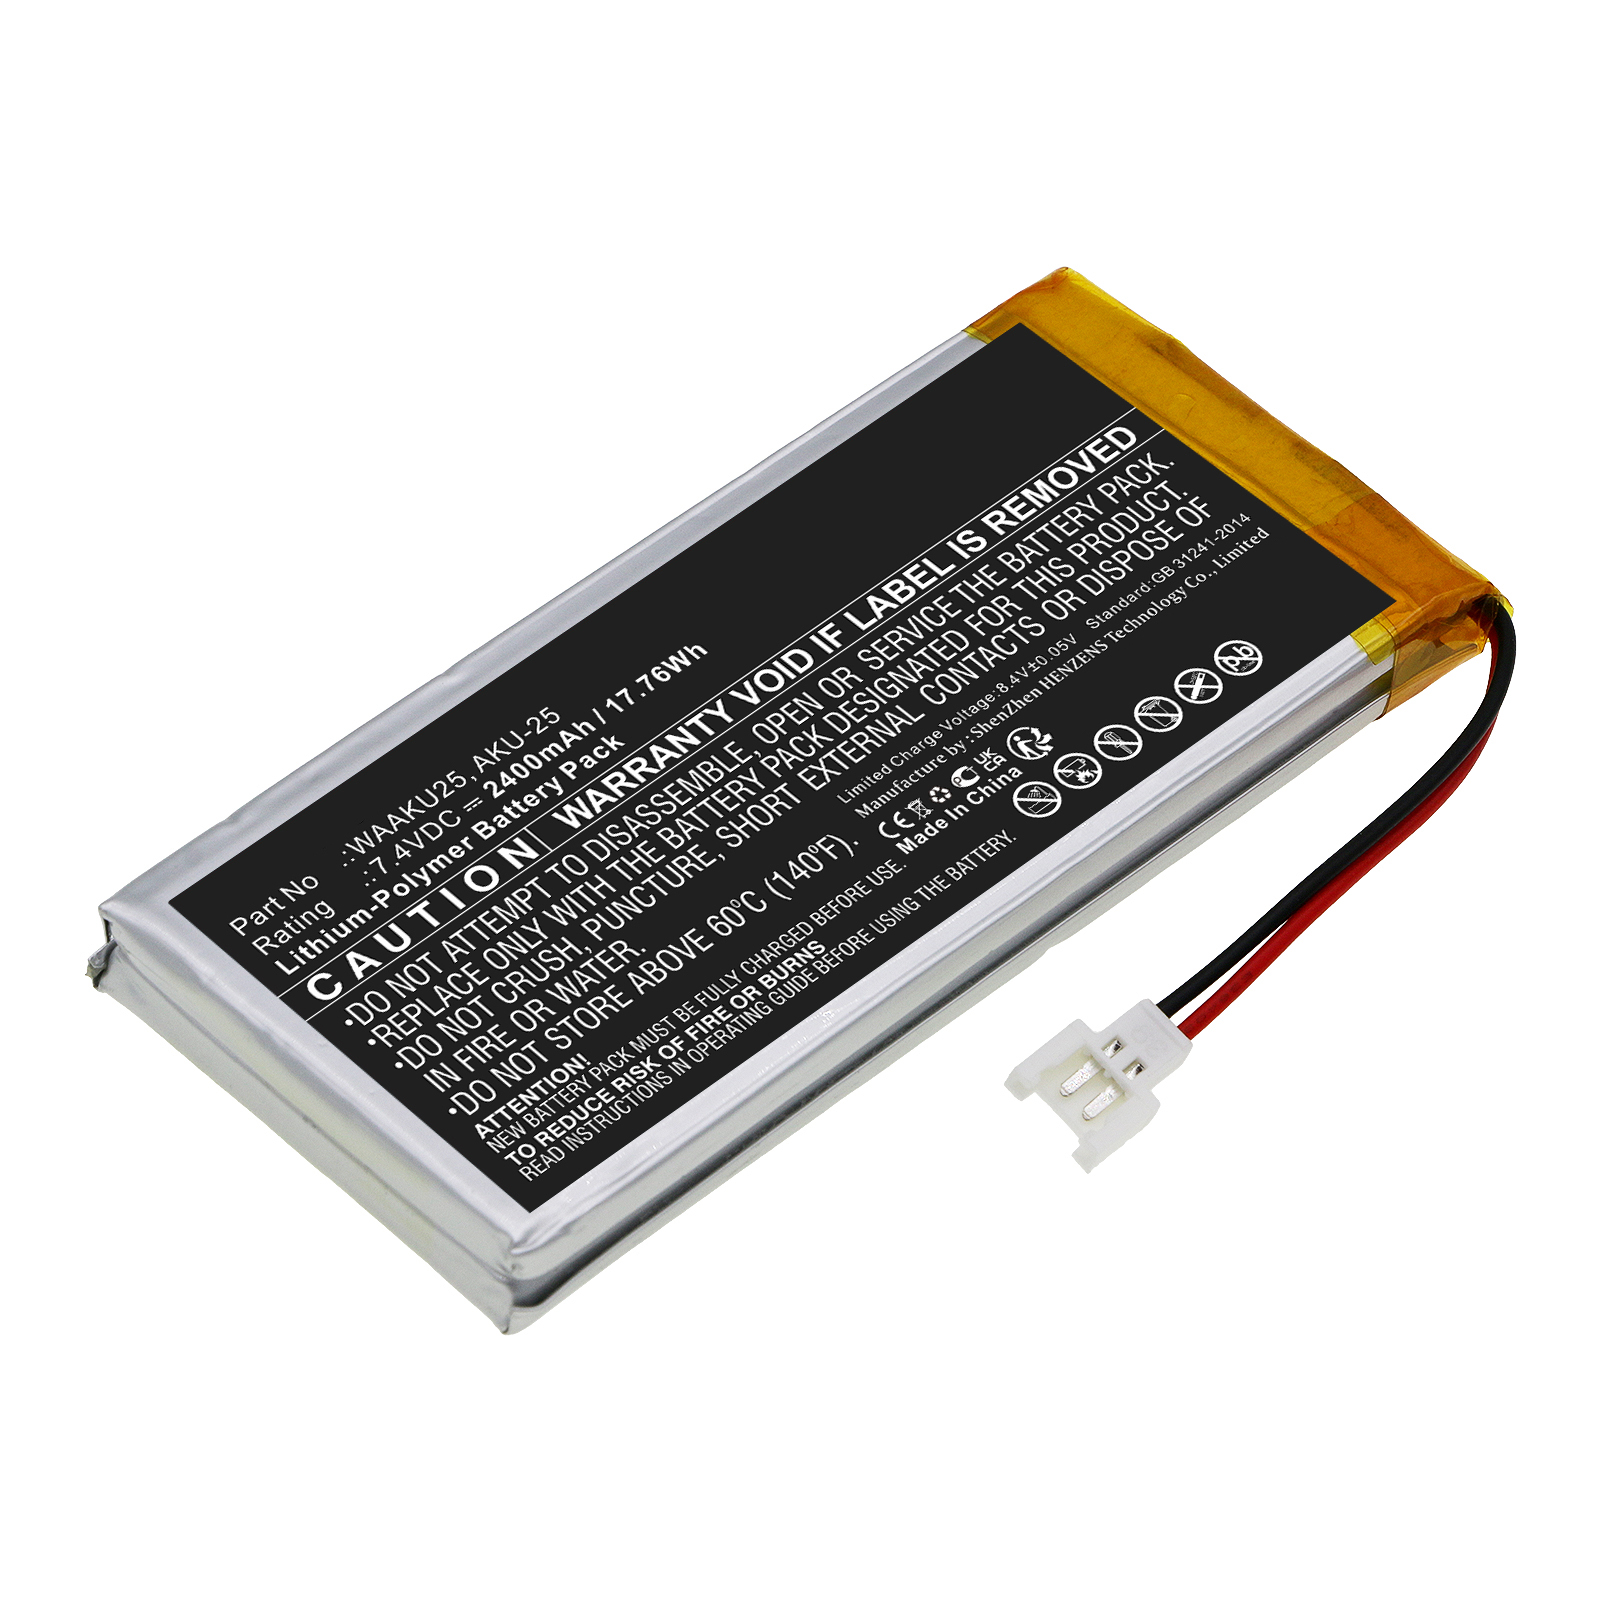 Synergy Digital Equipment Battery Compatible with SONEL AKU-25 Equipment Battery (Li-Pol, 7.4V, 2400mAh)